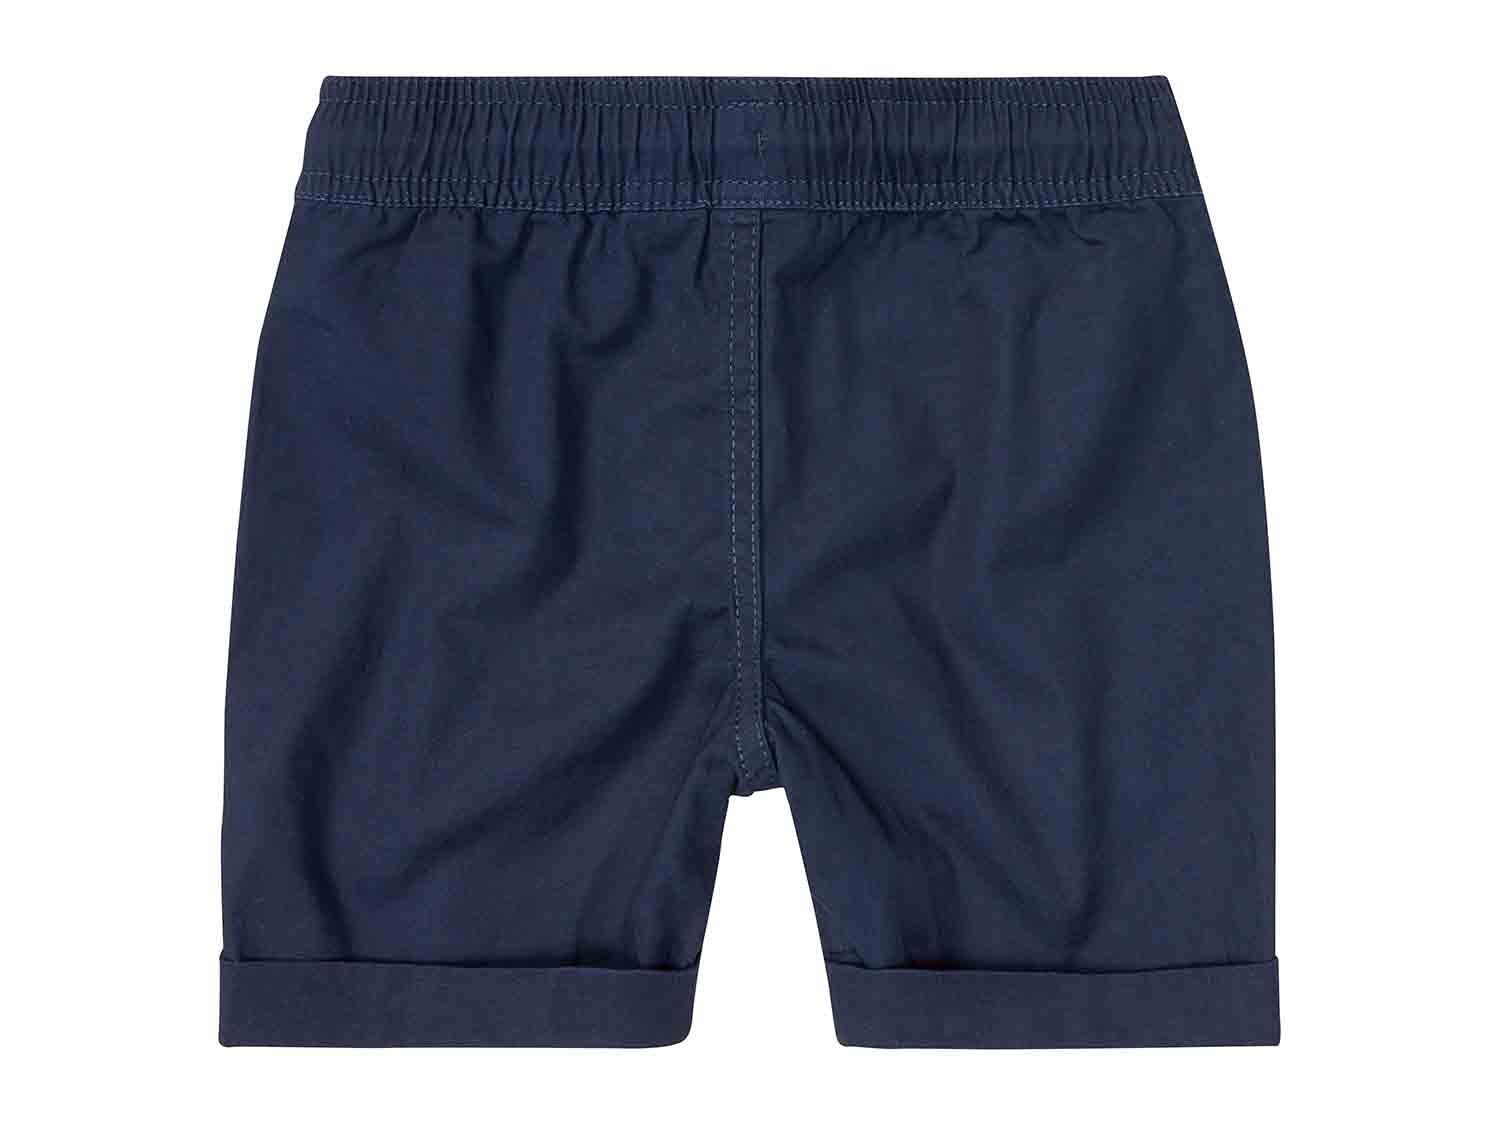 Pantalones cortos infantiles pack 2